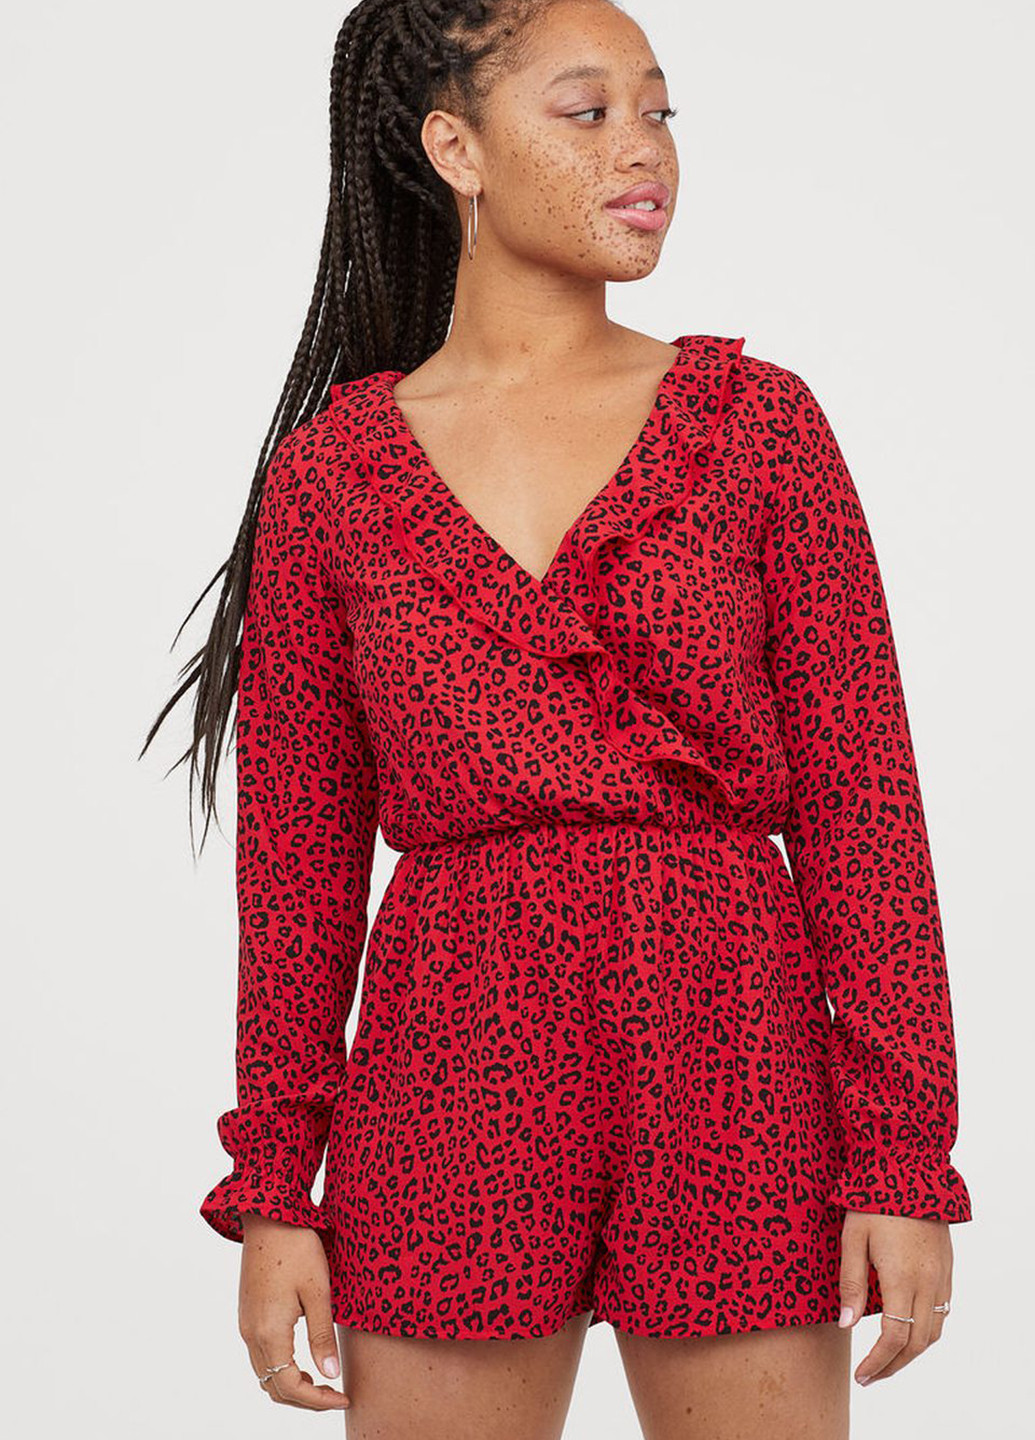 Комбинезон H&M комбинезон-шорты леопардовый красный кэжуал полиэстер, креп